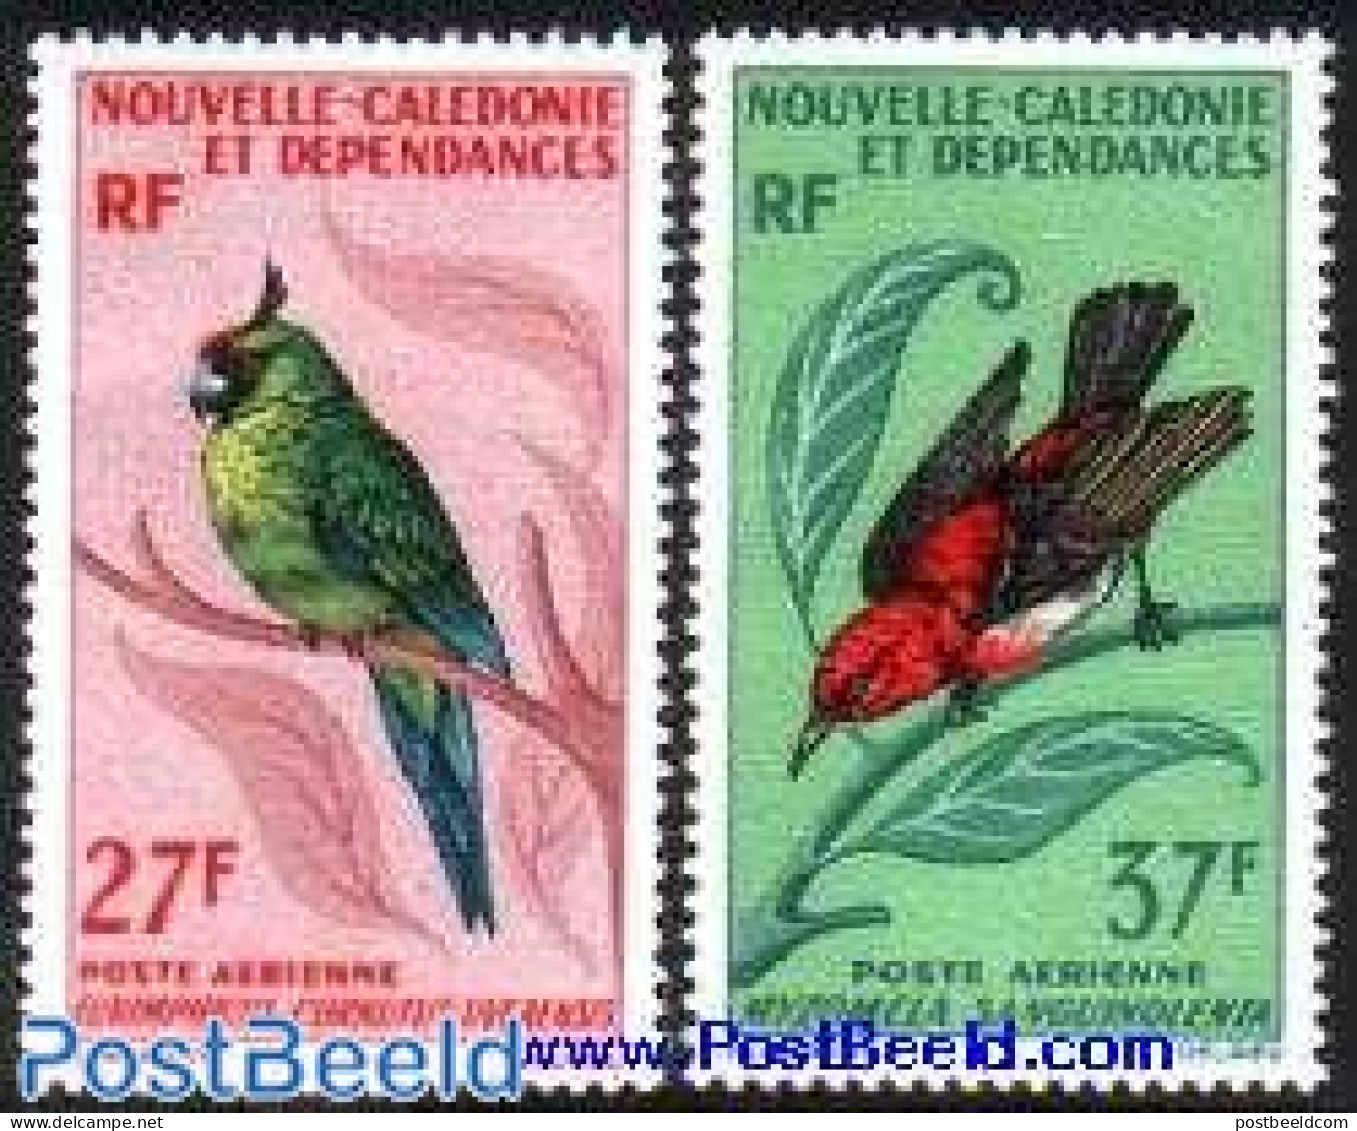 New Caledonia 1966 BIRDS 2V, Mint NH, Nature - Birds - Parrots - Ungebraucht